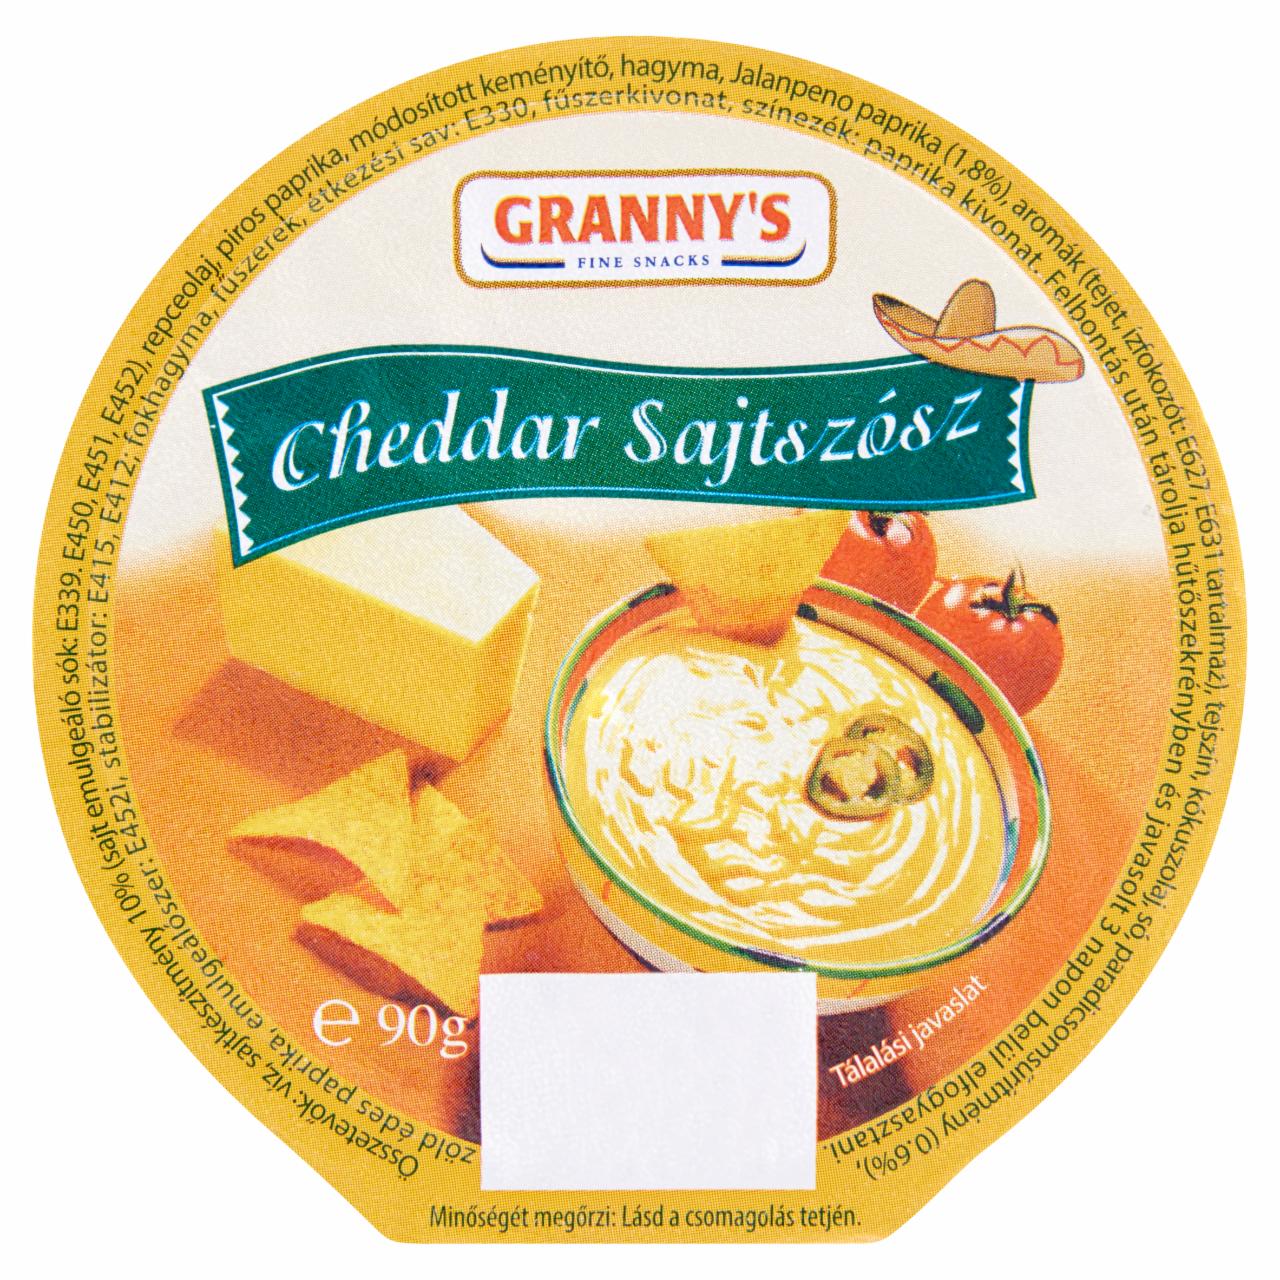 Képek - Granny's cheddar sajtszósz 90 g